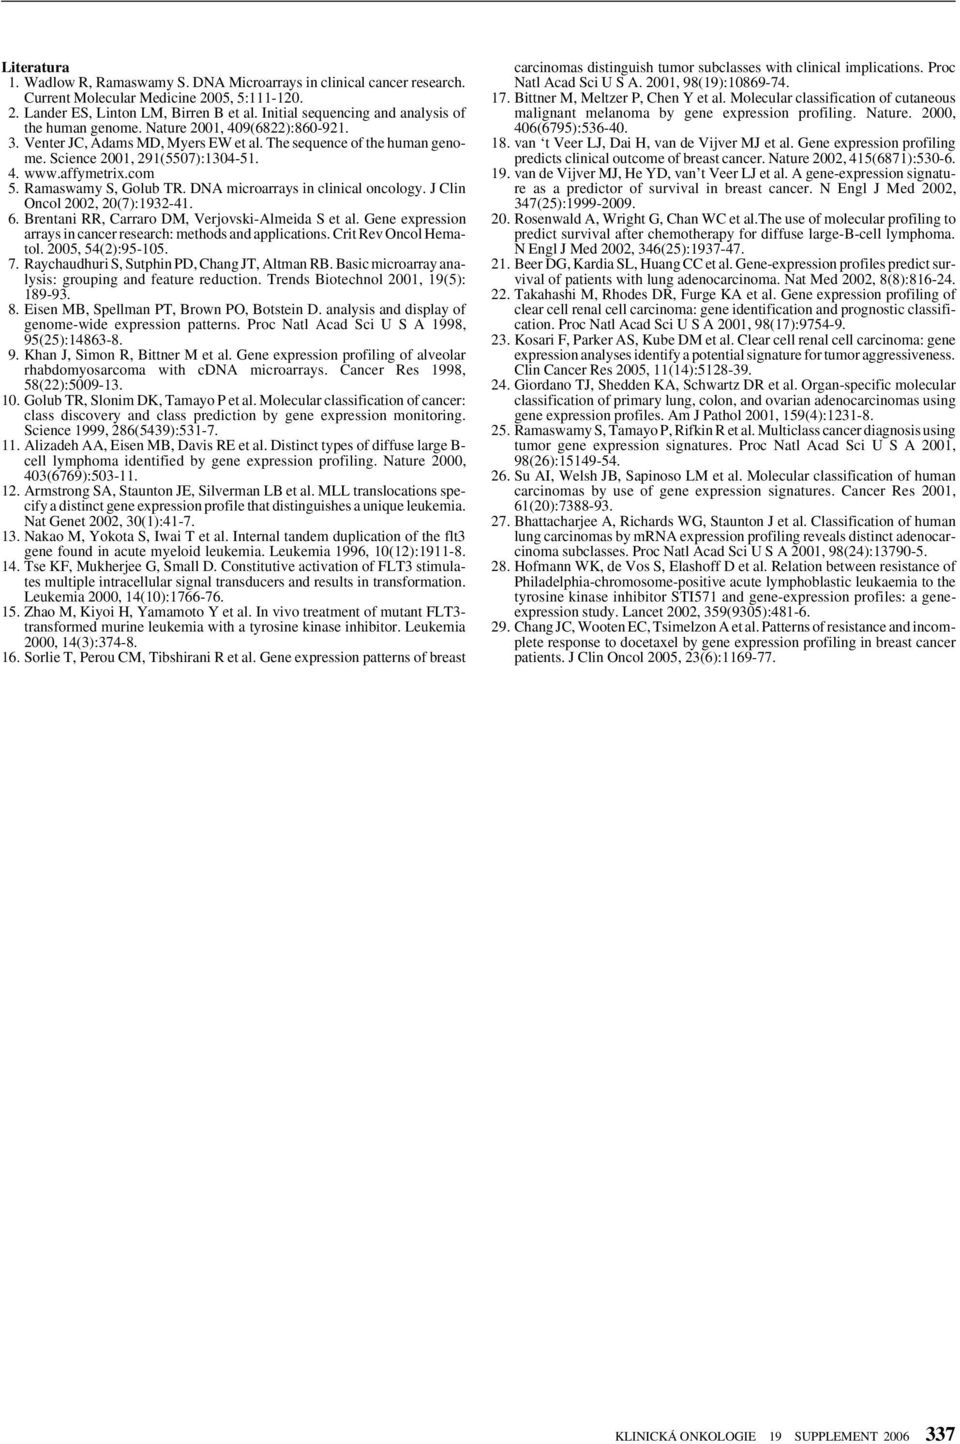 affymetrix.com 5. Ramaswamy S, Golub TR. DNA microarrays in clinical oncology. J Clin Oncol 2002, 20(7):1932-41. 6. Brentani RR, Carraro DM, Verjovski-Almeida S et al.